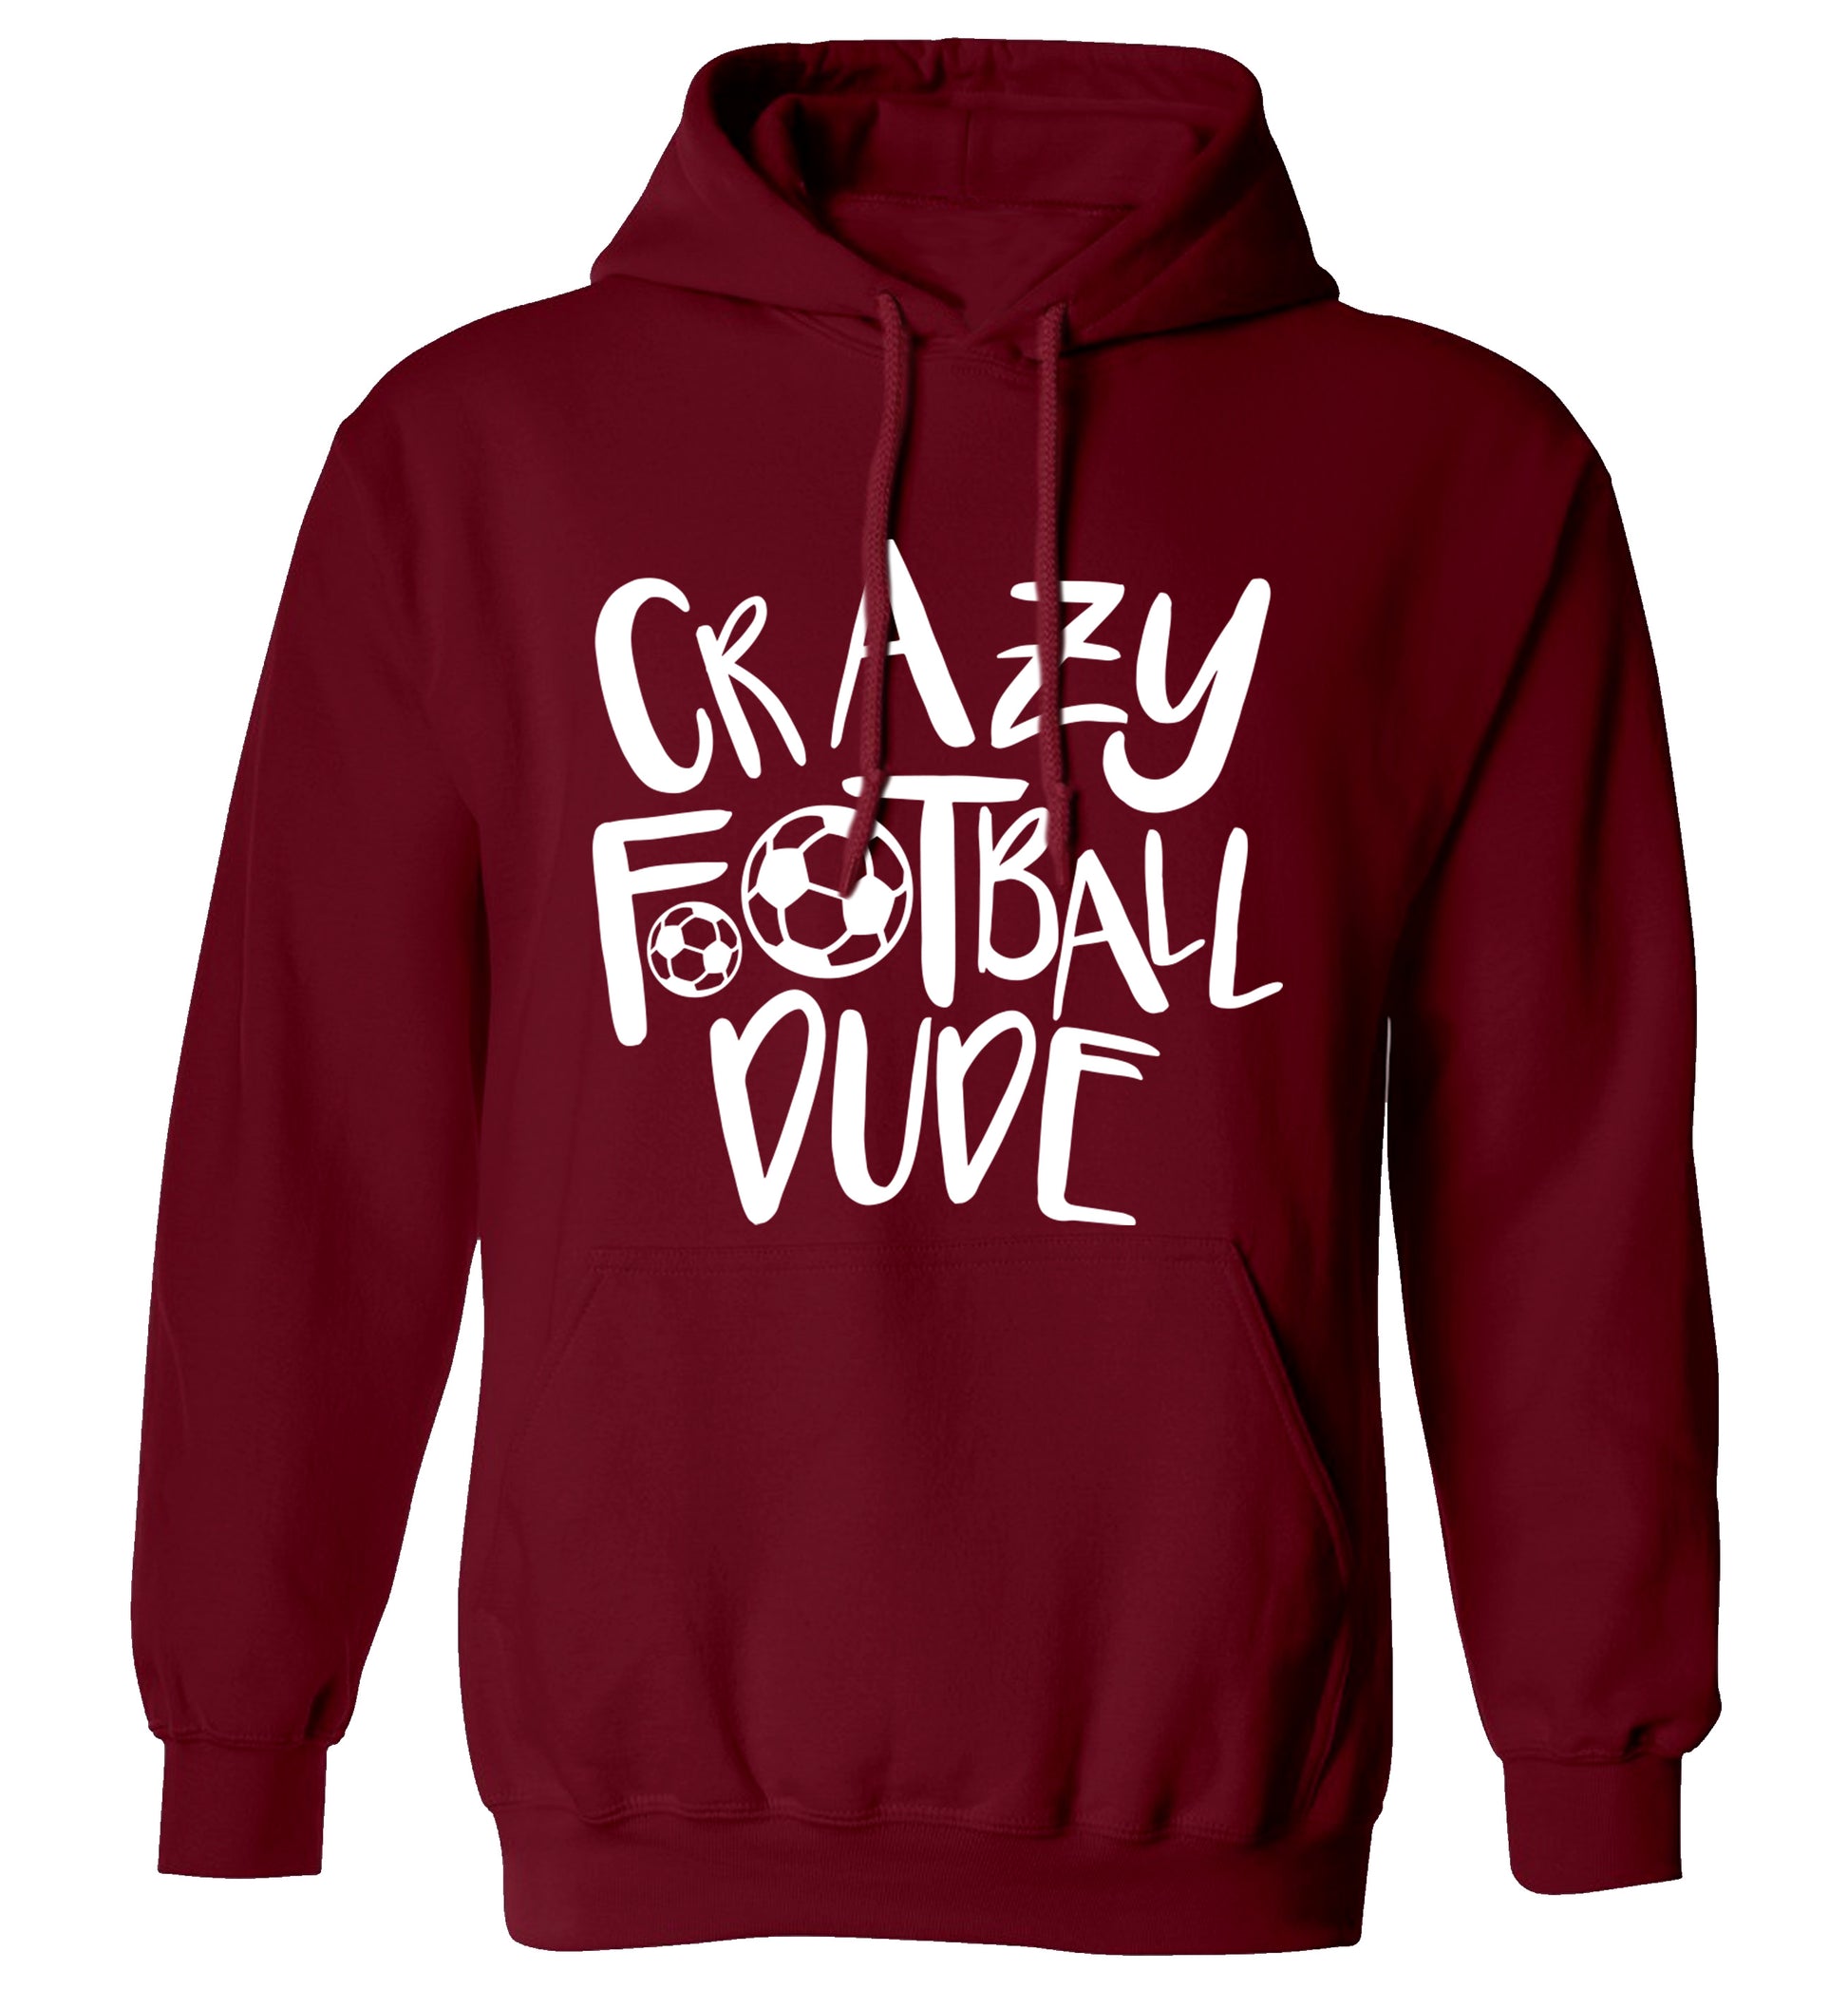 Crazy football dude adults unisexmaroon hoodie 2XL